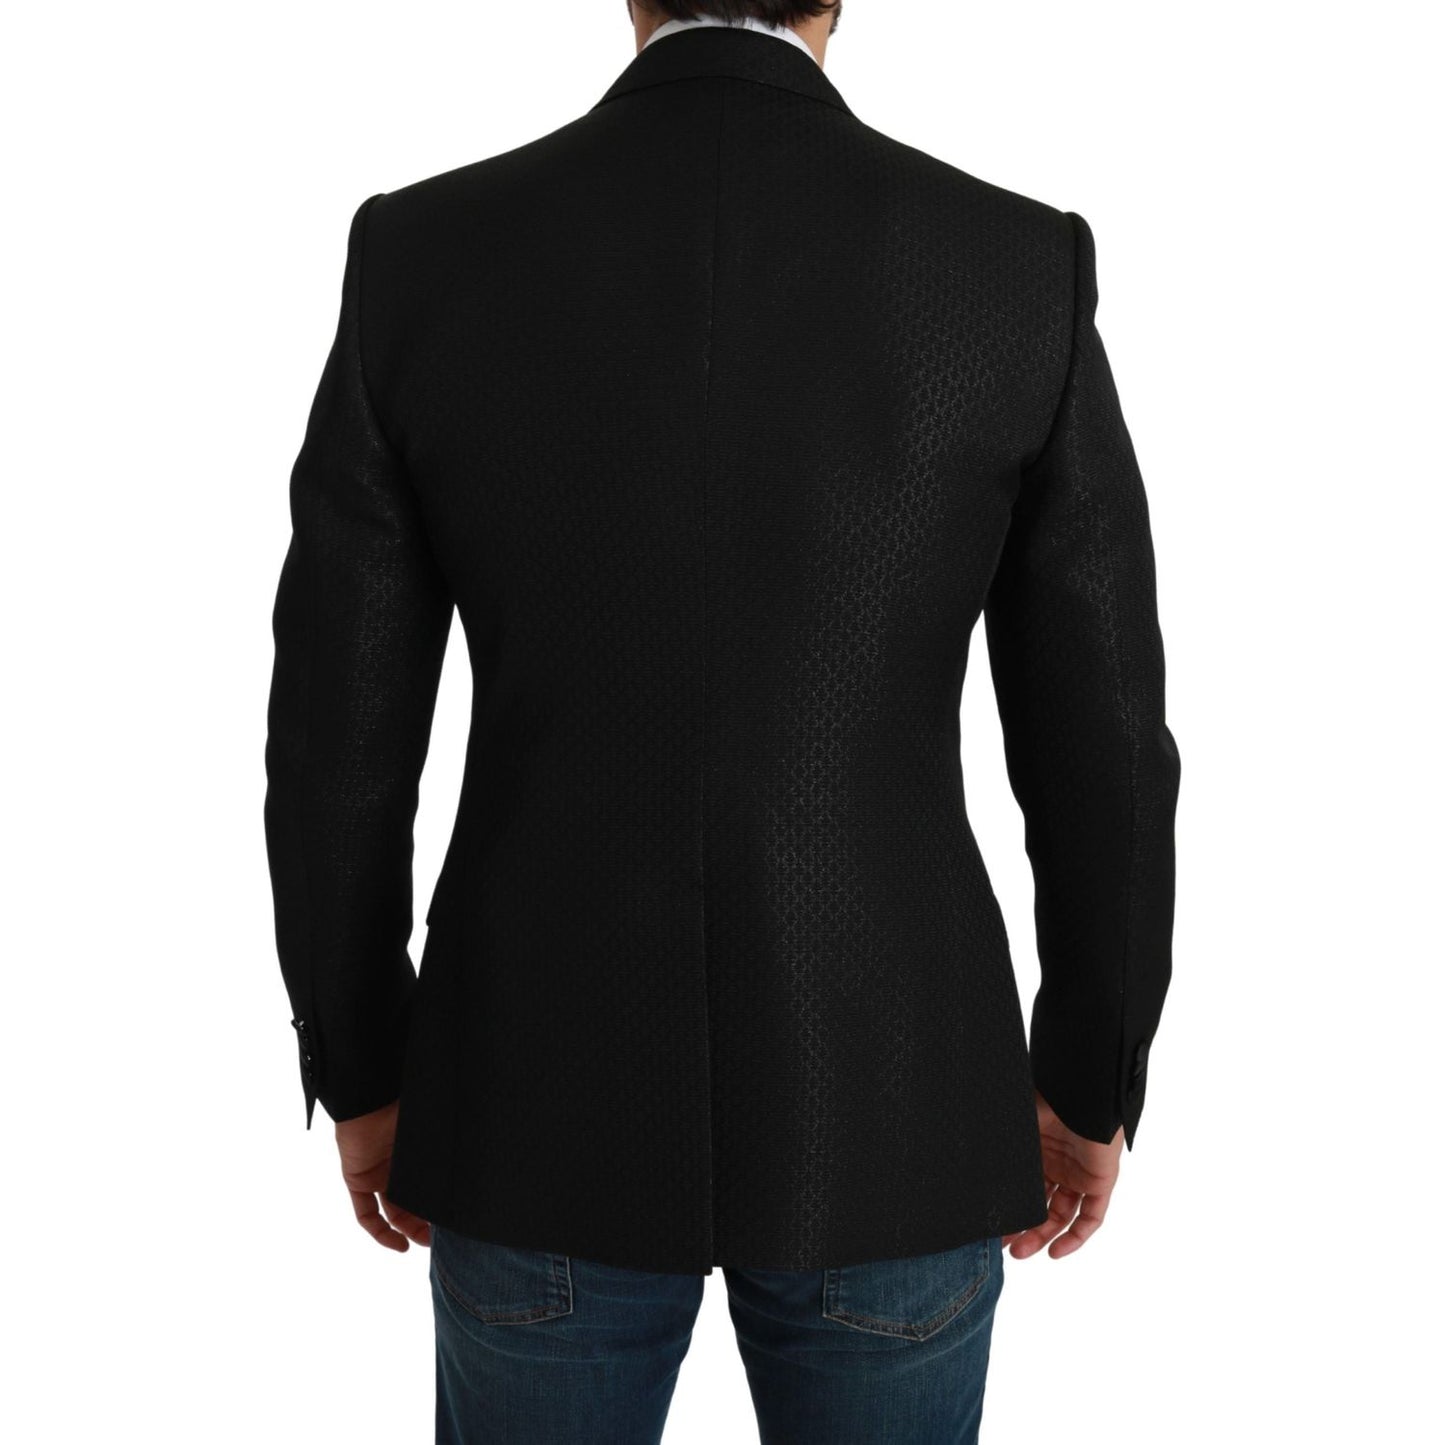 Dolce & Gabbana Slim Fit Martini Black Blazer Jacket black-slim-fit-jacket-martini-blazer Suit IMG_1015-scaled-c691172c-66e.jpg